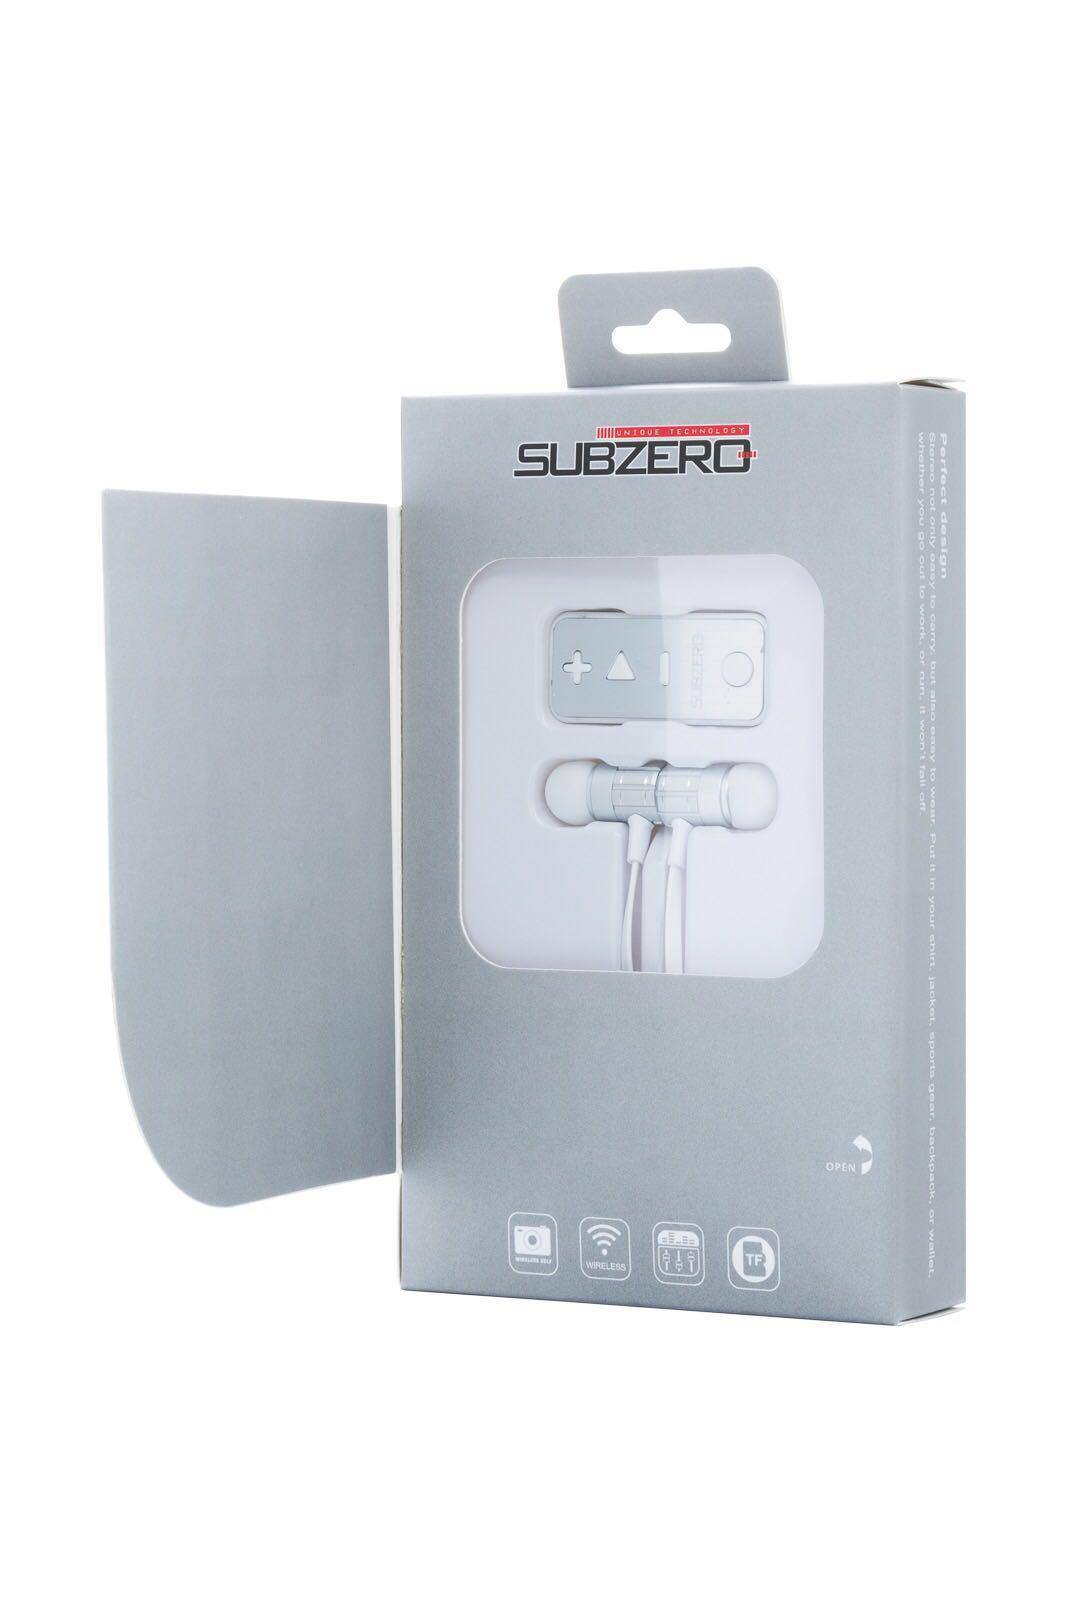 WHITE BLUETOOTH HEADPHONES SBZ-020 WITH SD CARD SLOT